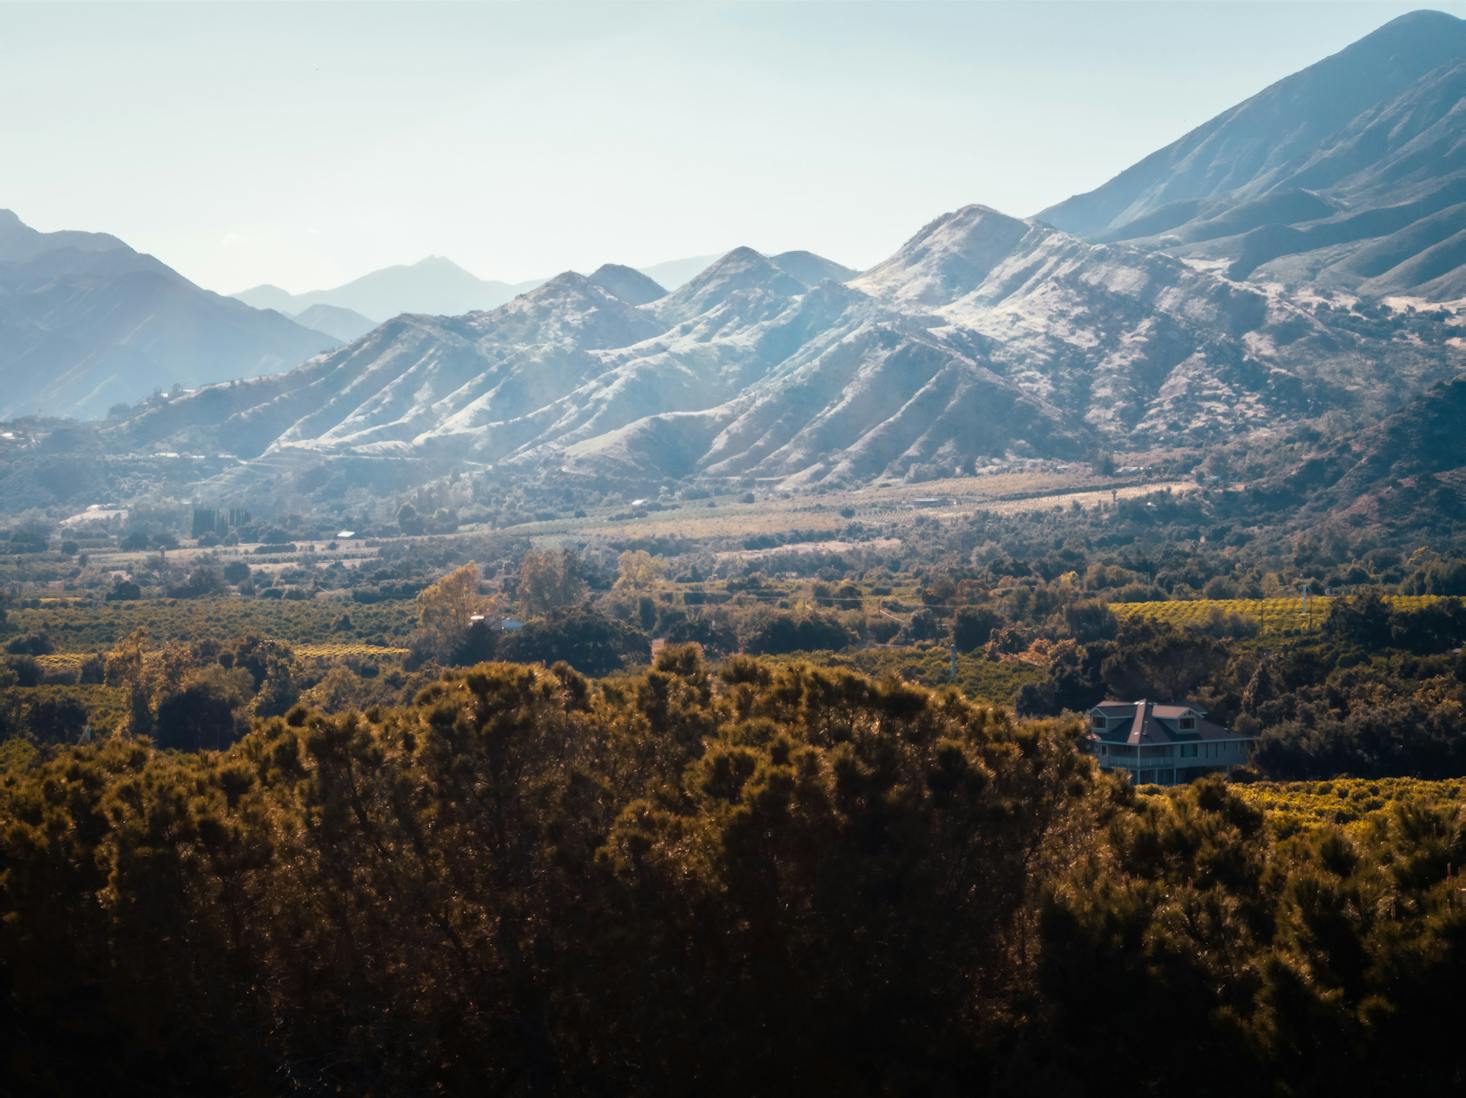 Mountains surrounding Ojai, California